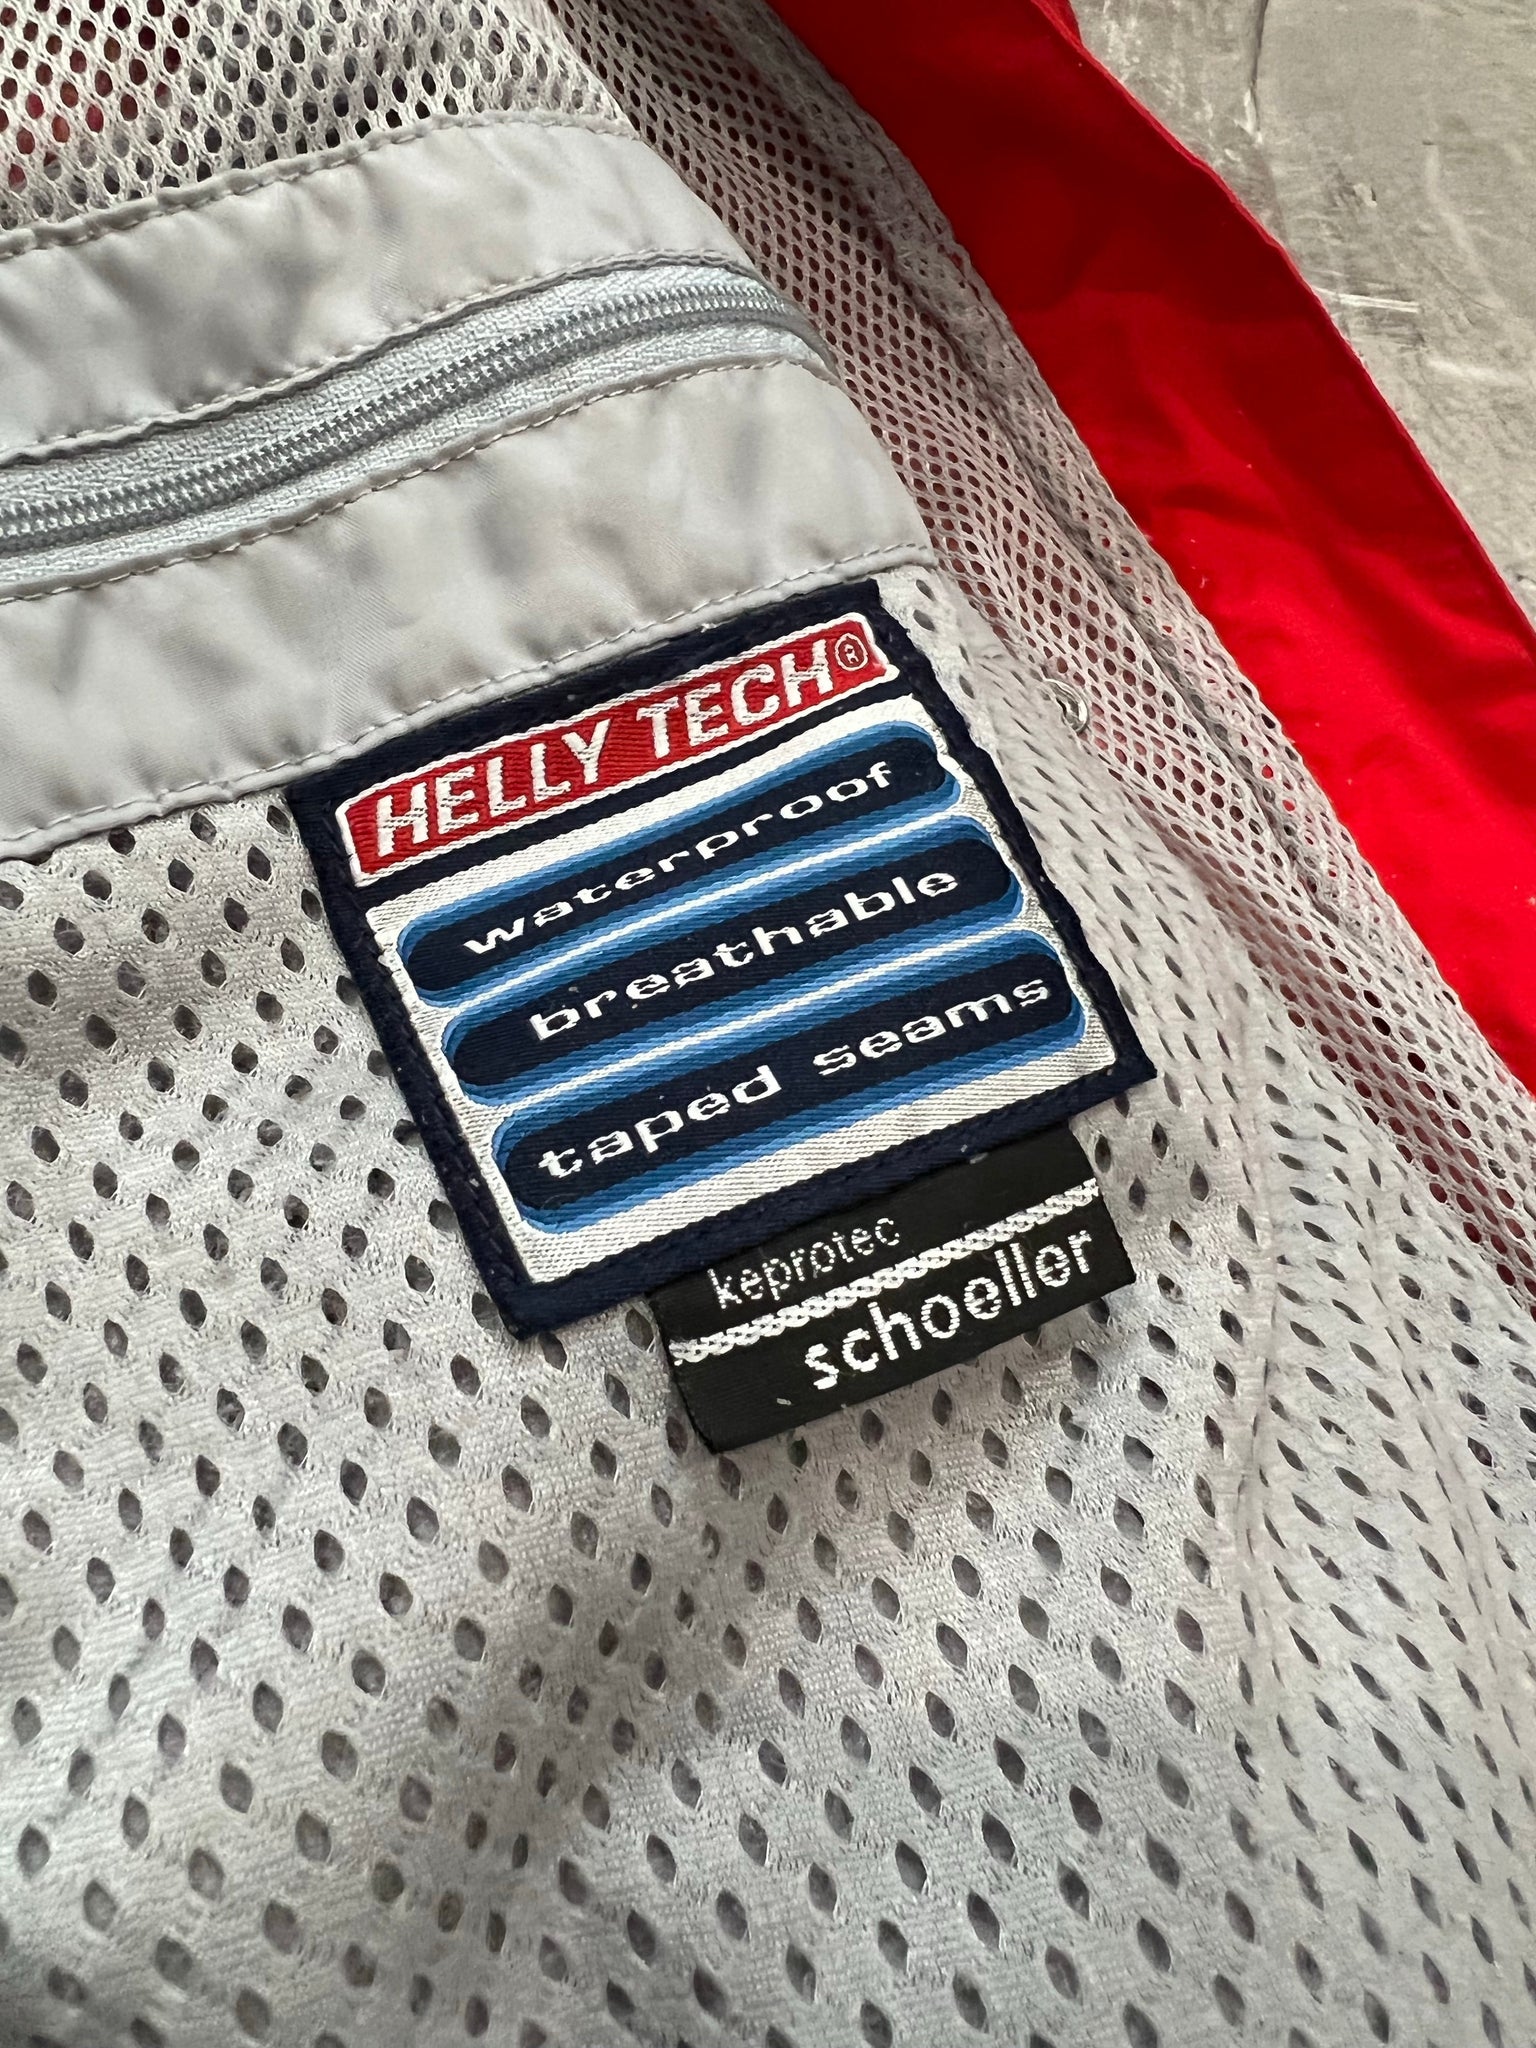 Helly Hansen technical ski jacket M/L